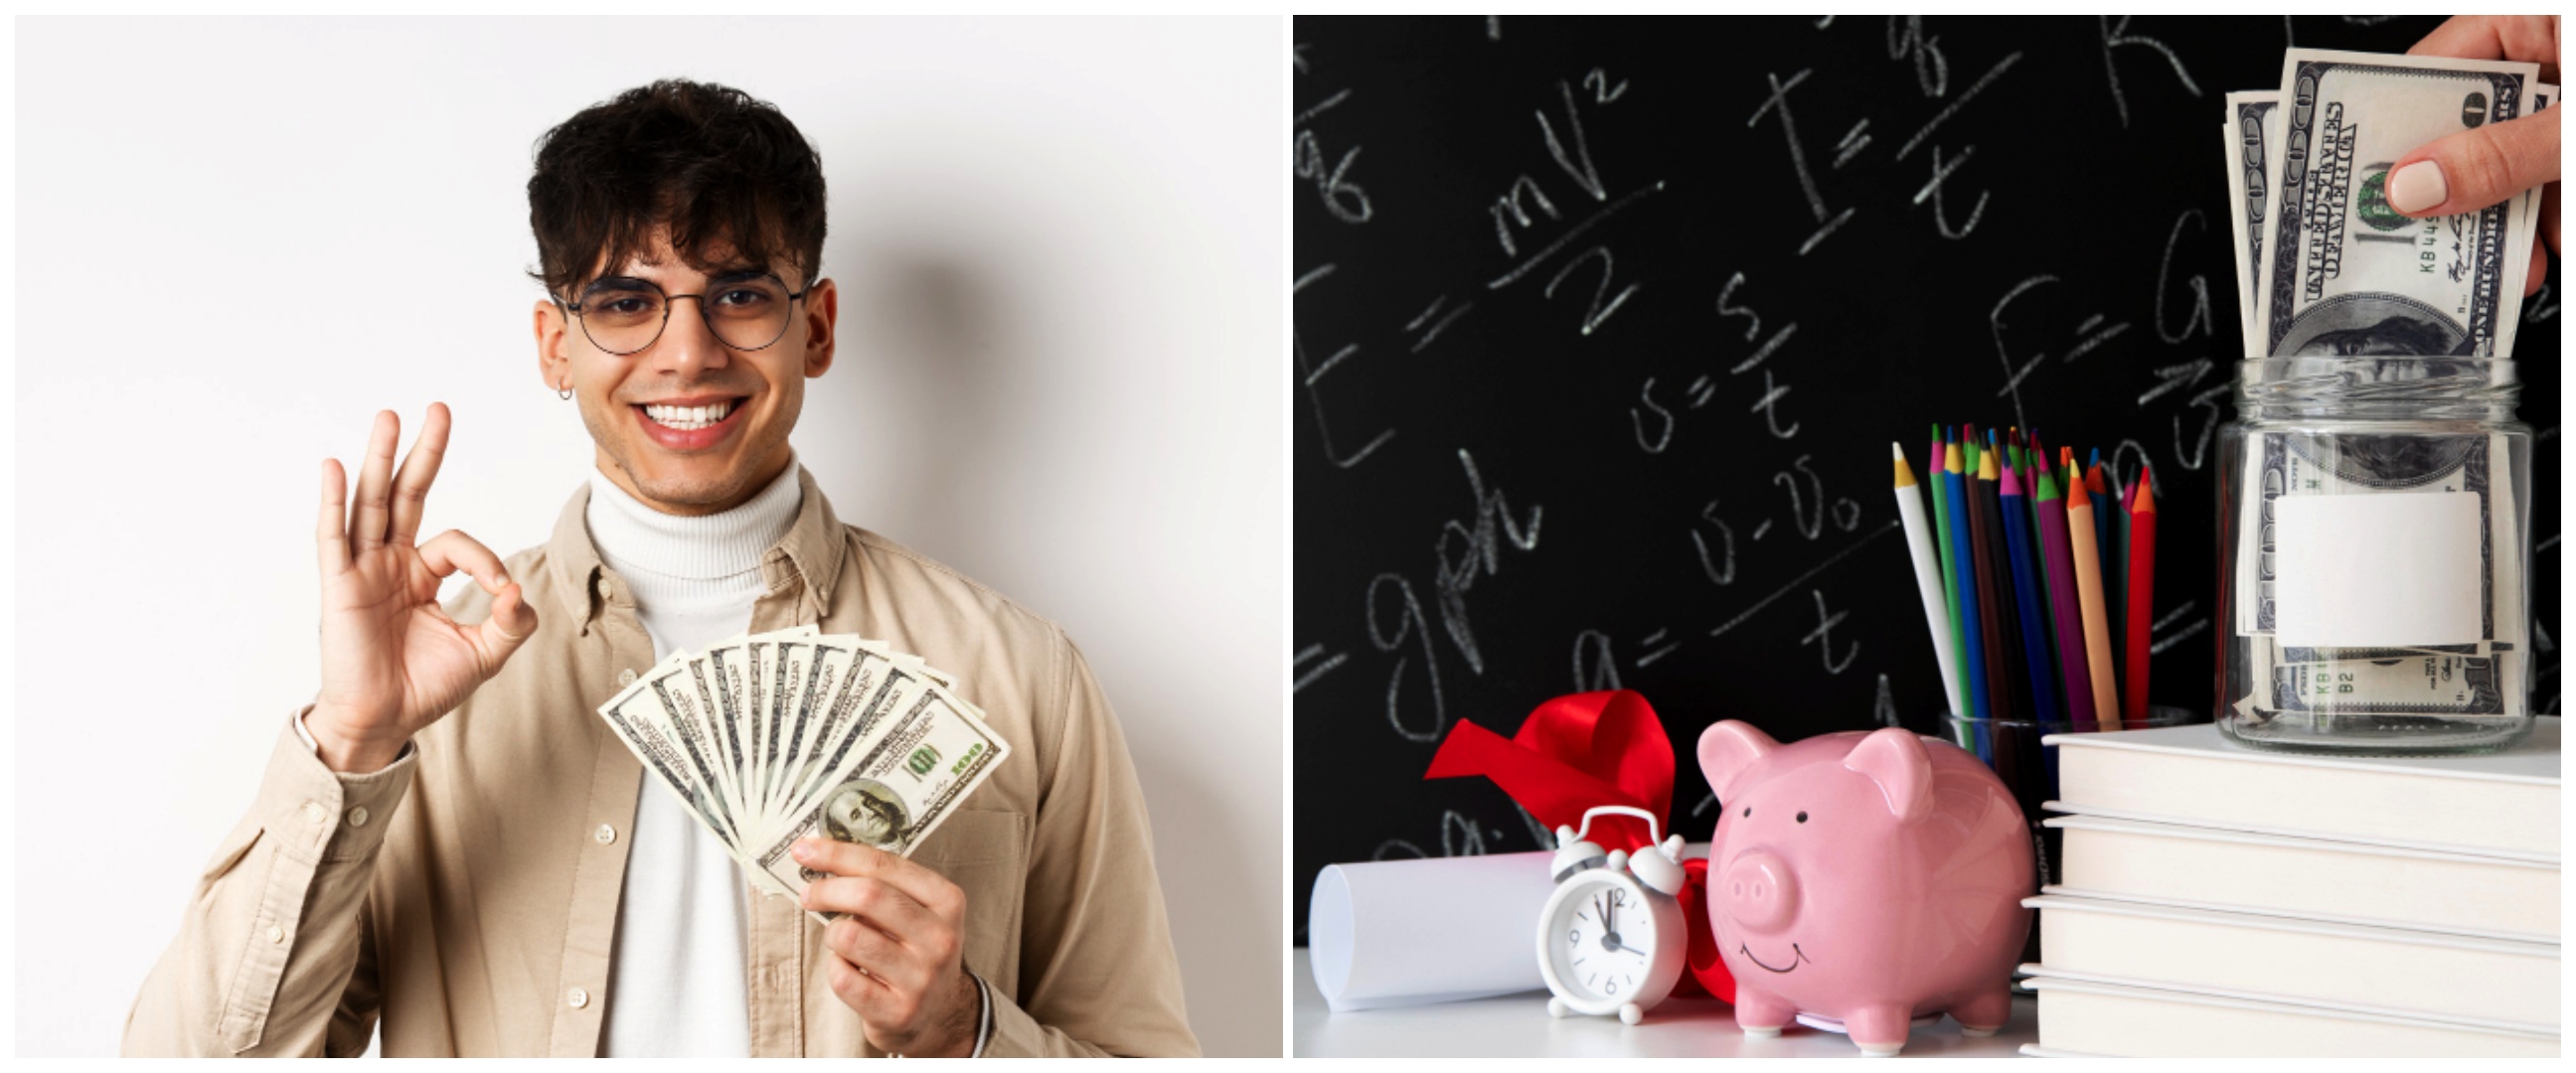 7 Cara mengatur uang mingguan buat pelajar, masih cukup untuk jajan atau beli barang impian